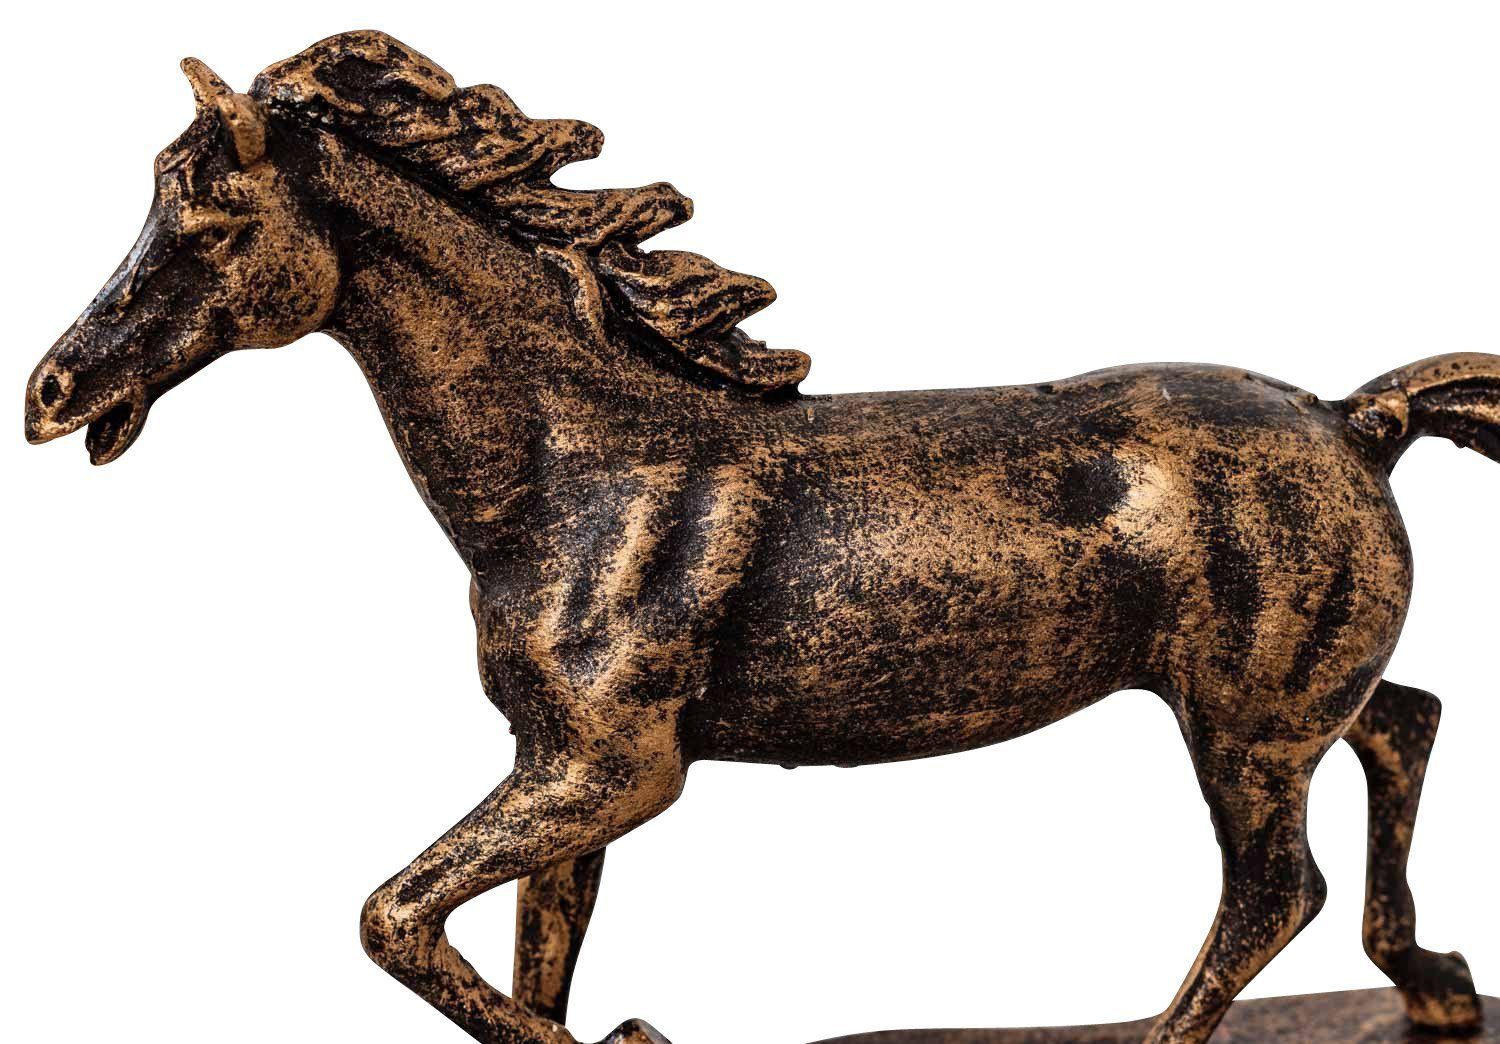 Aubaho Dekofigur Eisenfigur Pferd Tier Eisen Figur Skulptur 24cm Antik-Stil